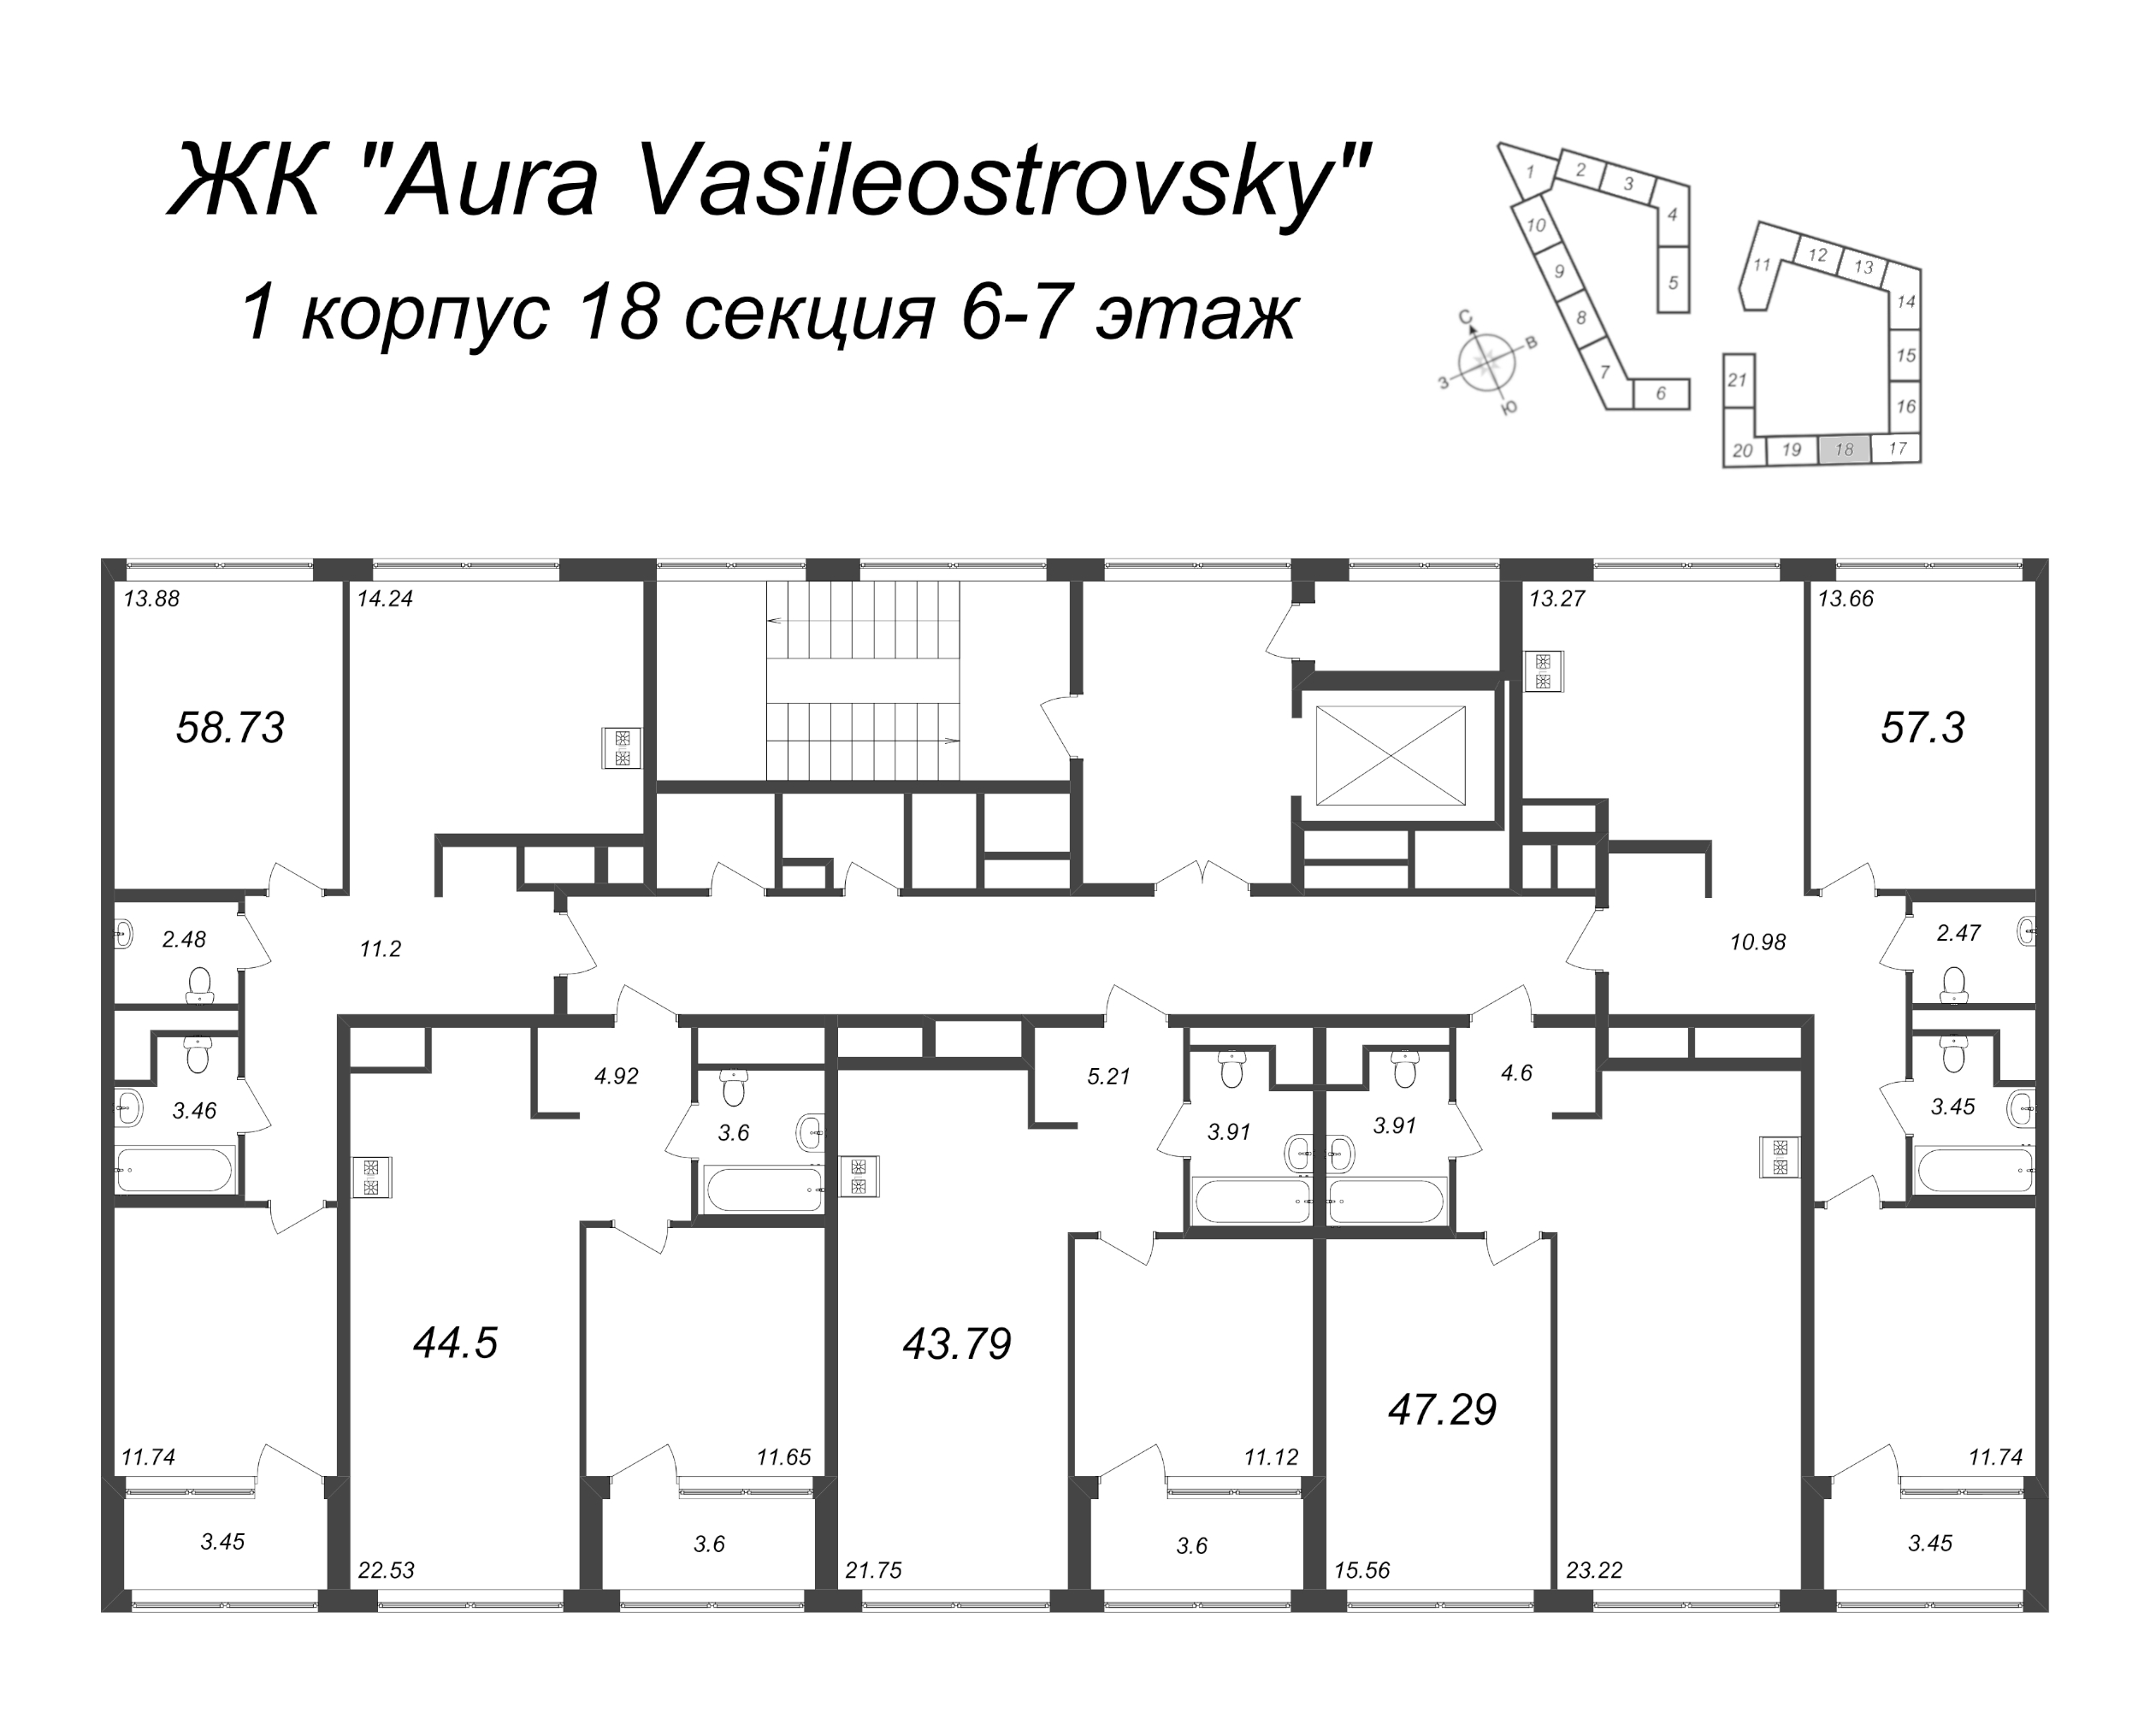 2-комнатная (Евро) квартира, 44.5 м² - планировка этажа